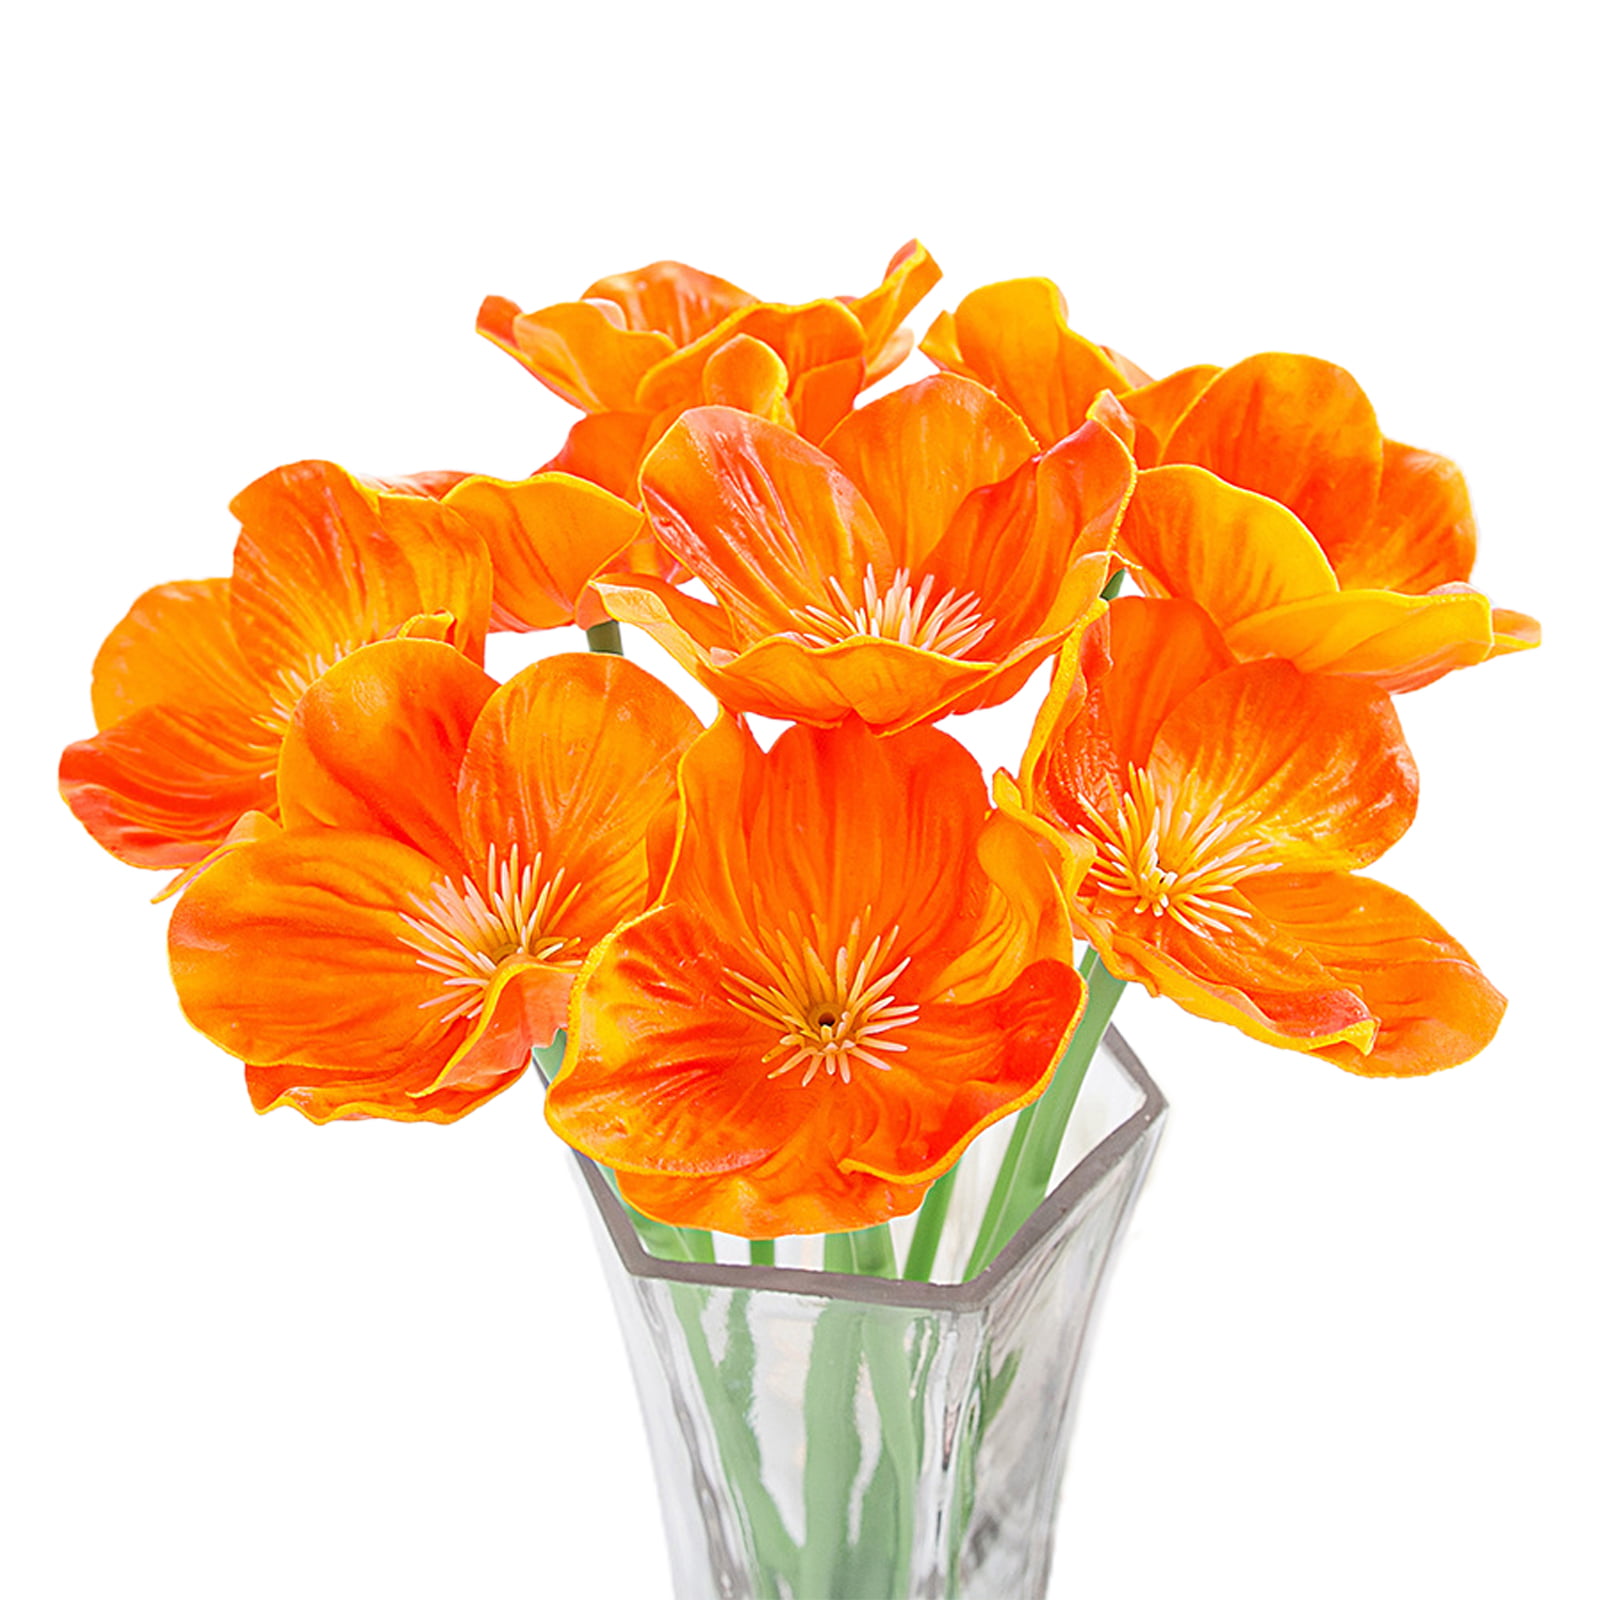 Artificial Poppies in Vase Orange Decorative Silks Poppy Flowers Mothers Day 